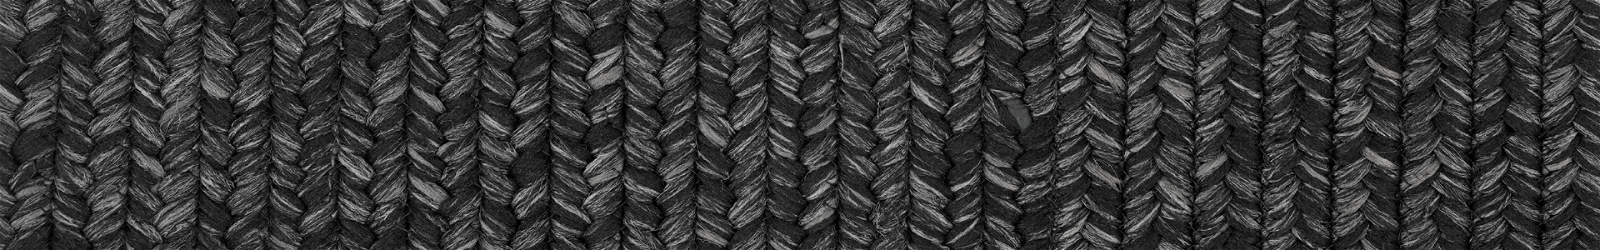 Olefin - Black Braided Rugs